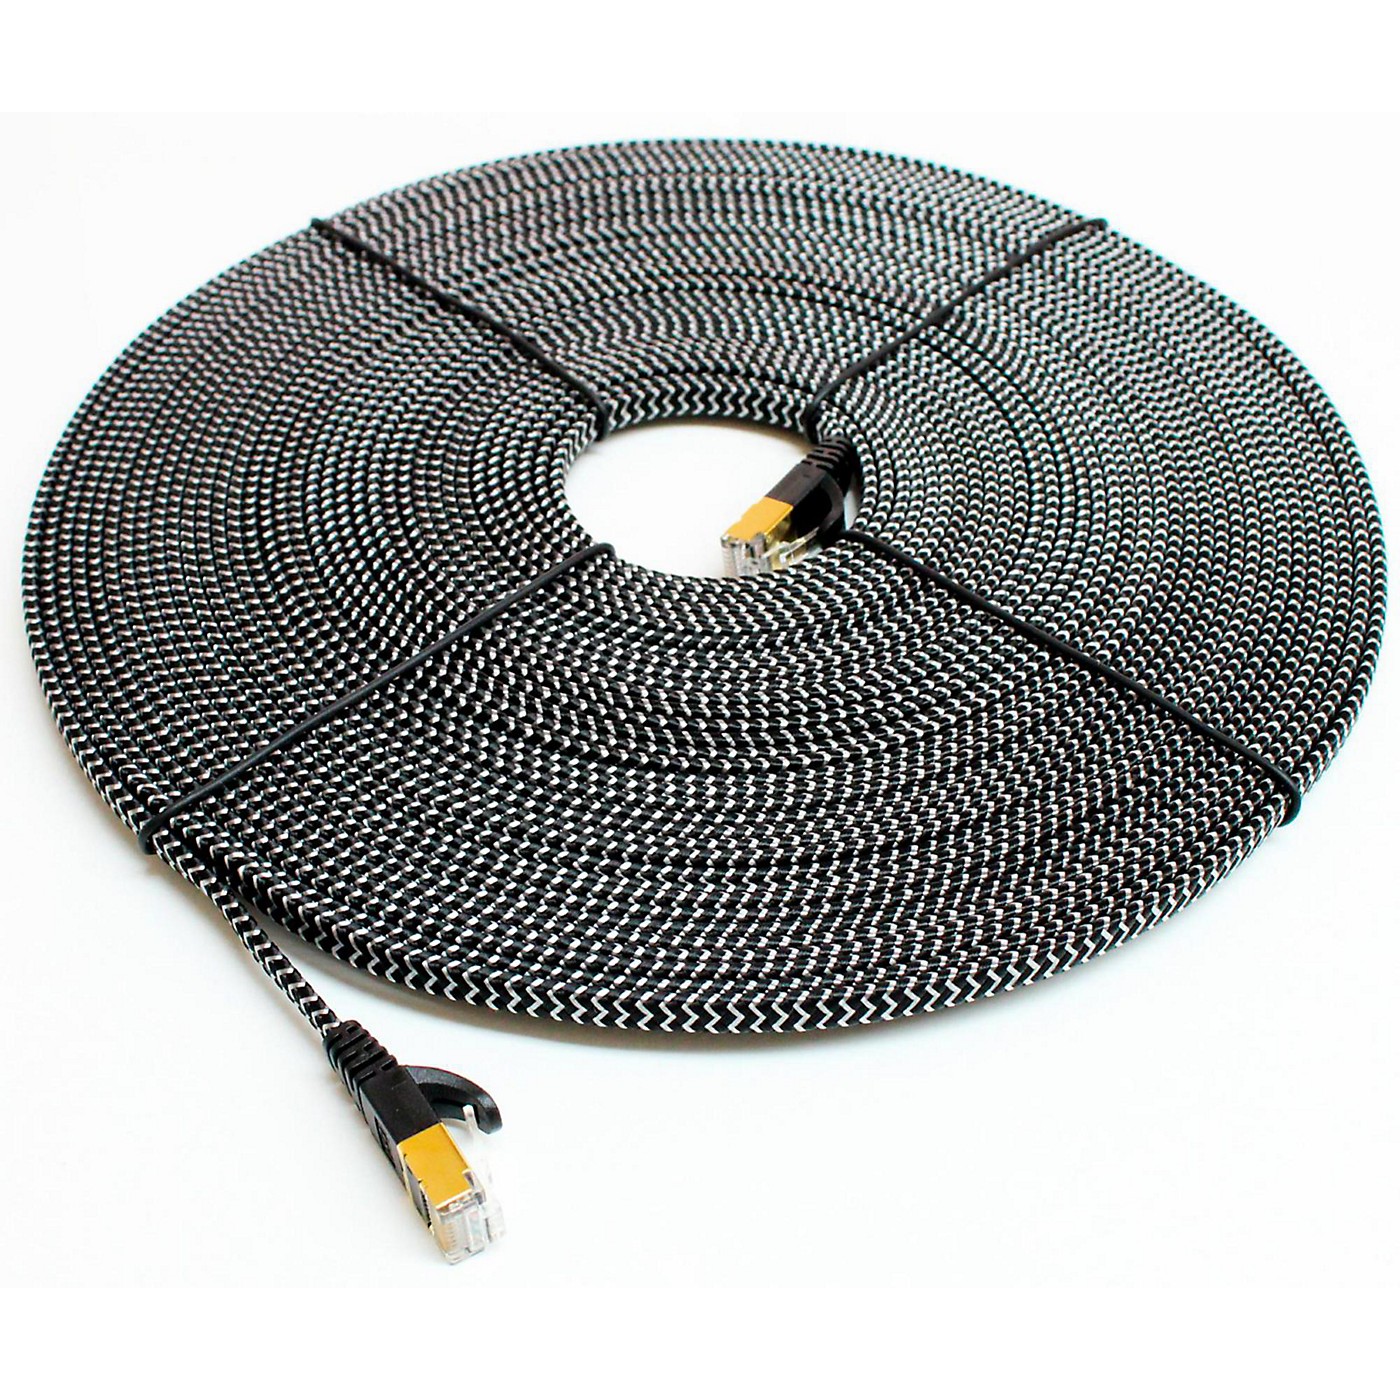 Tera Grand CAT7 10 Gigabit Ethernet Ultra Flat Braided Cable, Black/White thumbnail